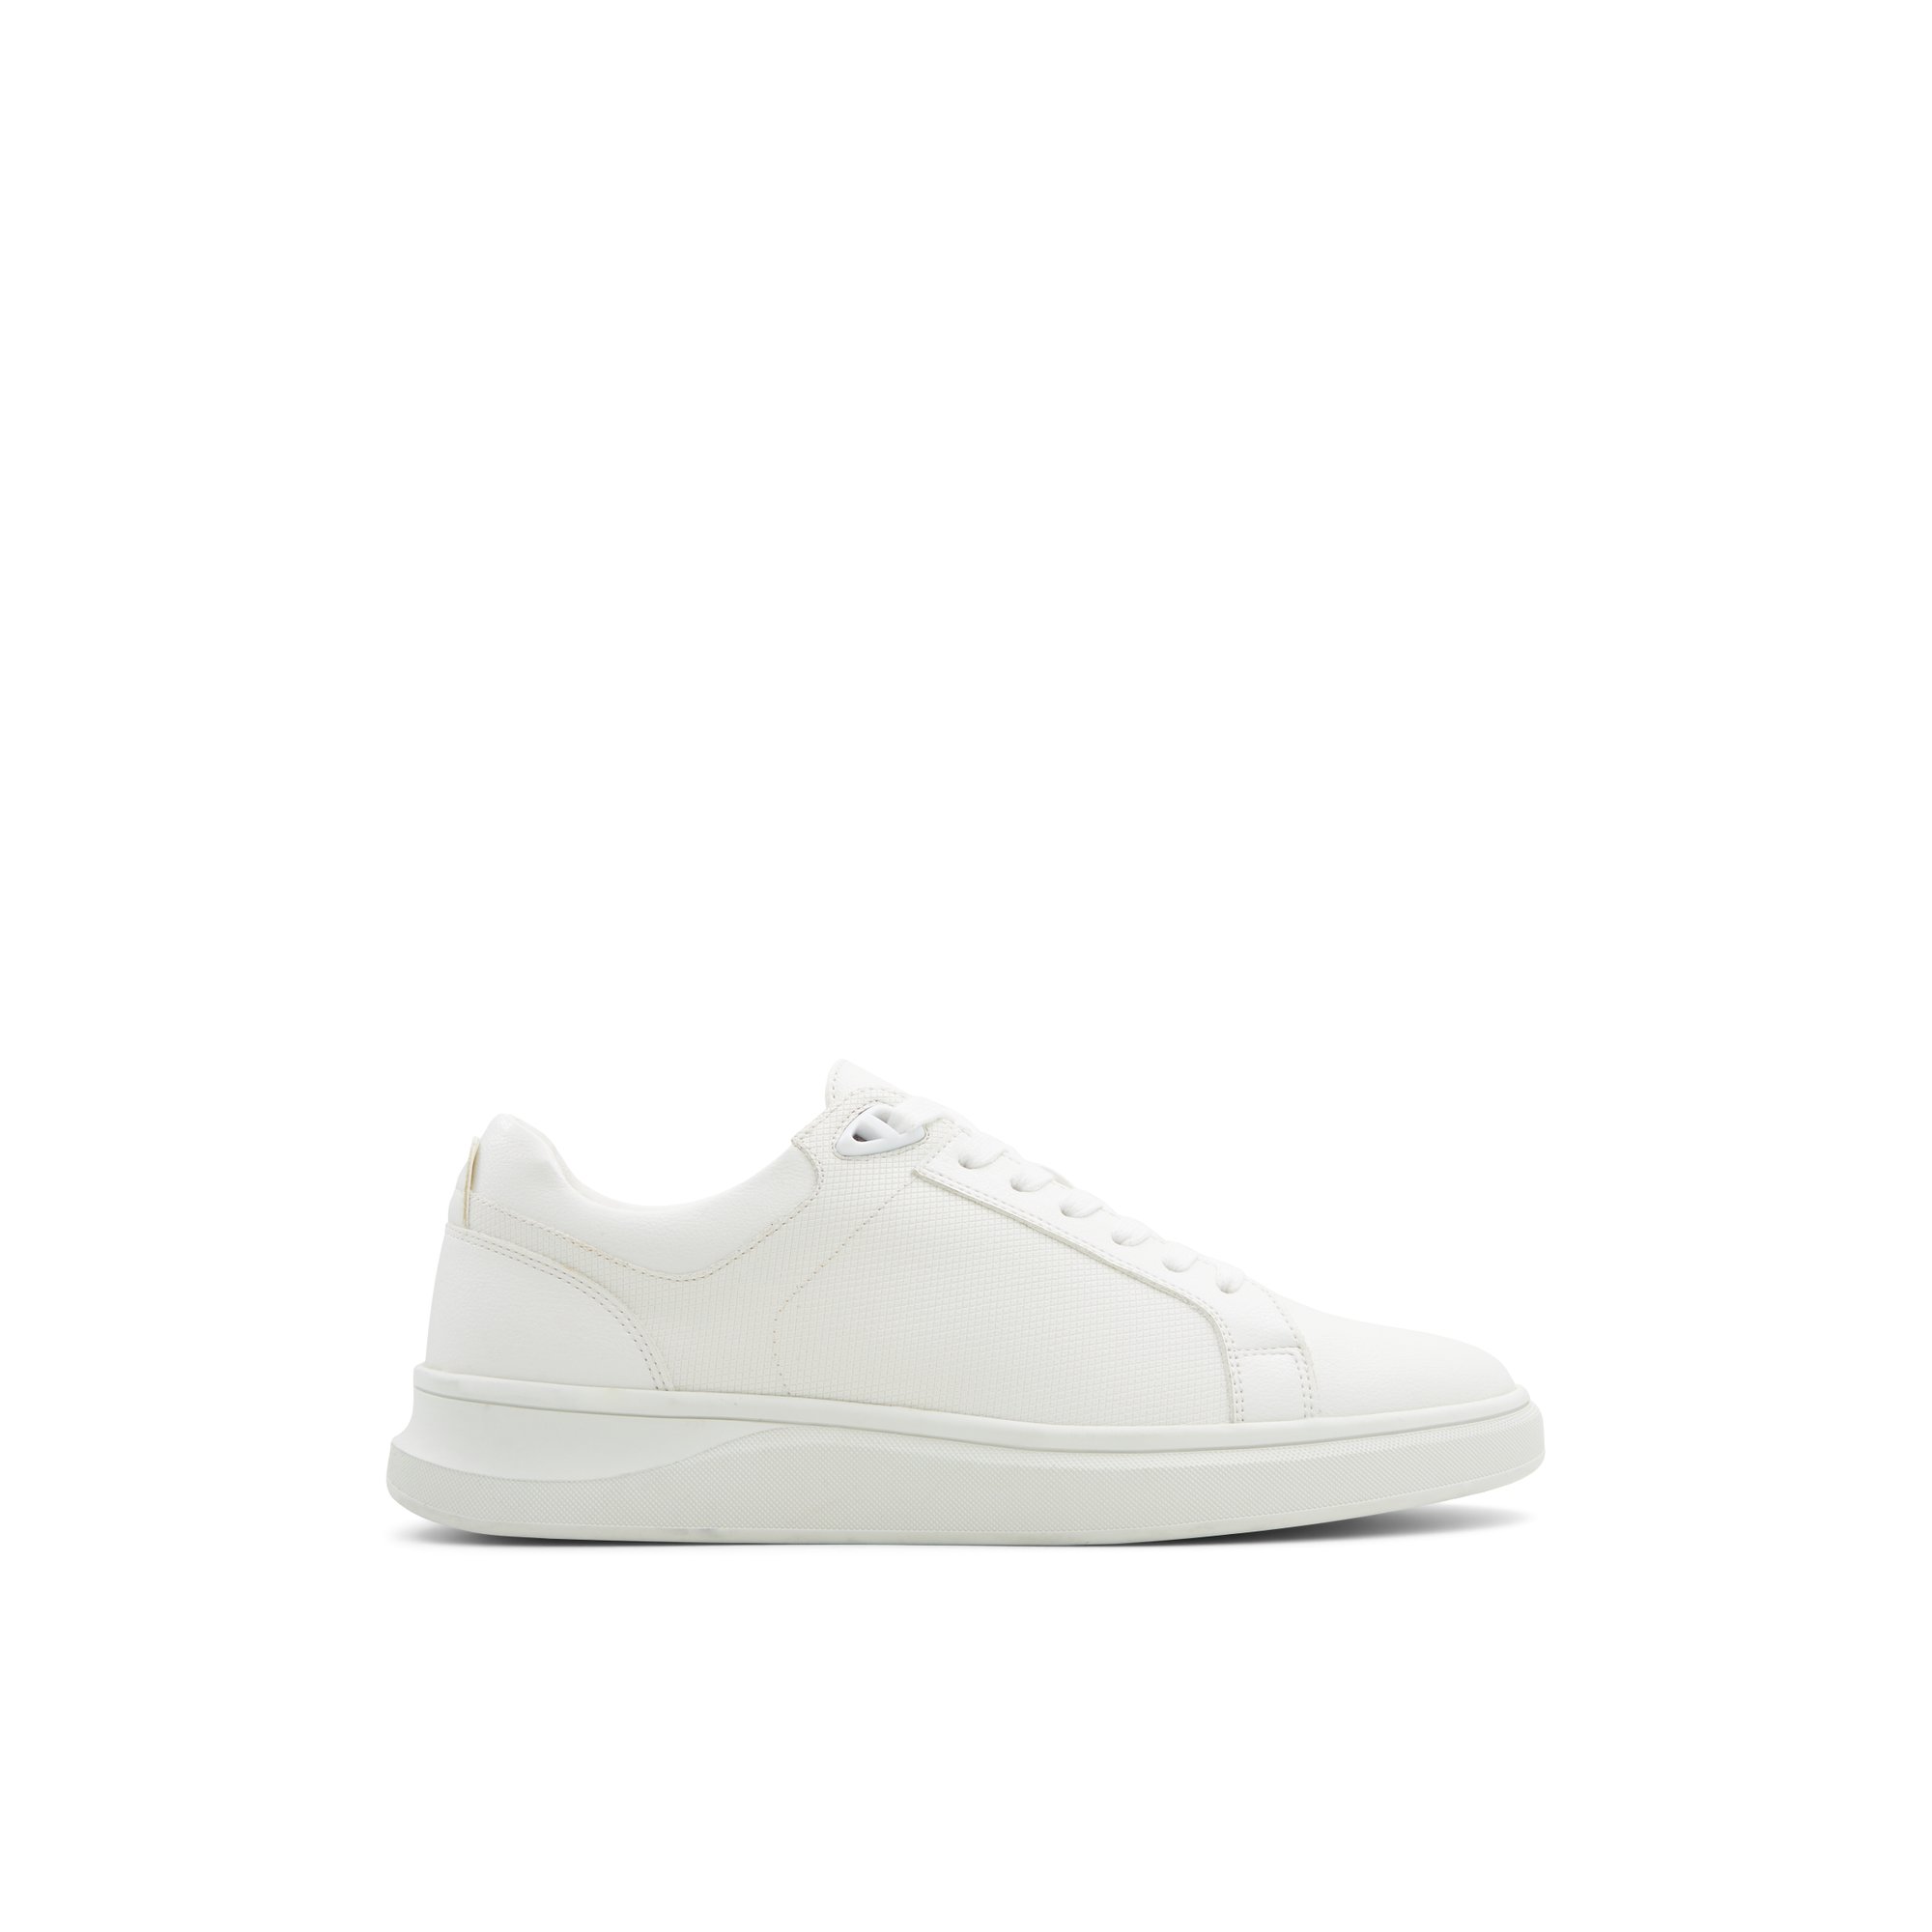 ALDO Caecien - Men's Sneakers Low Top - White